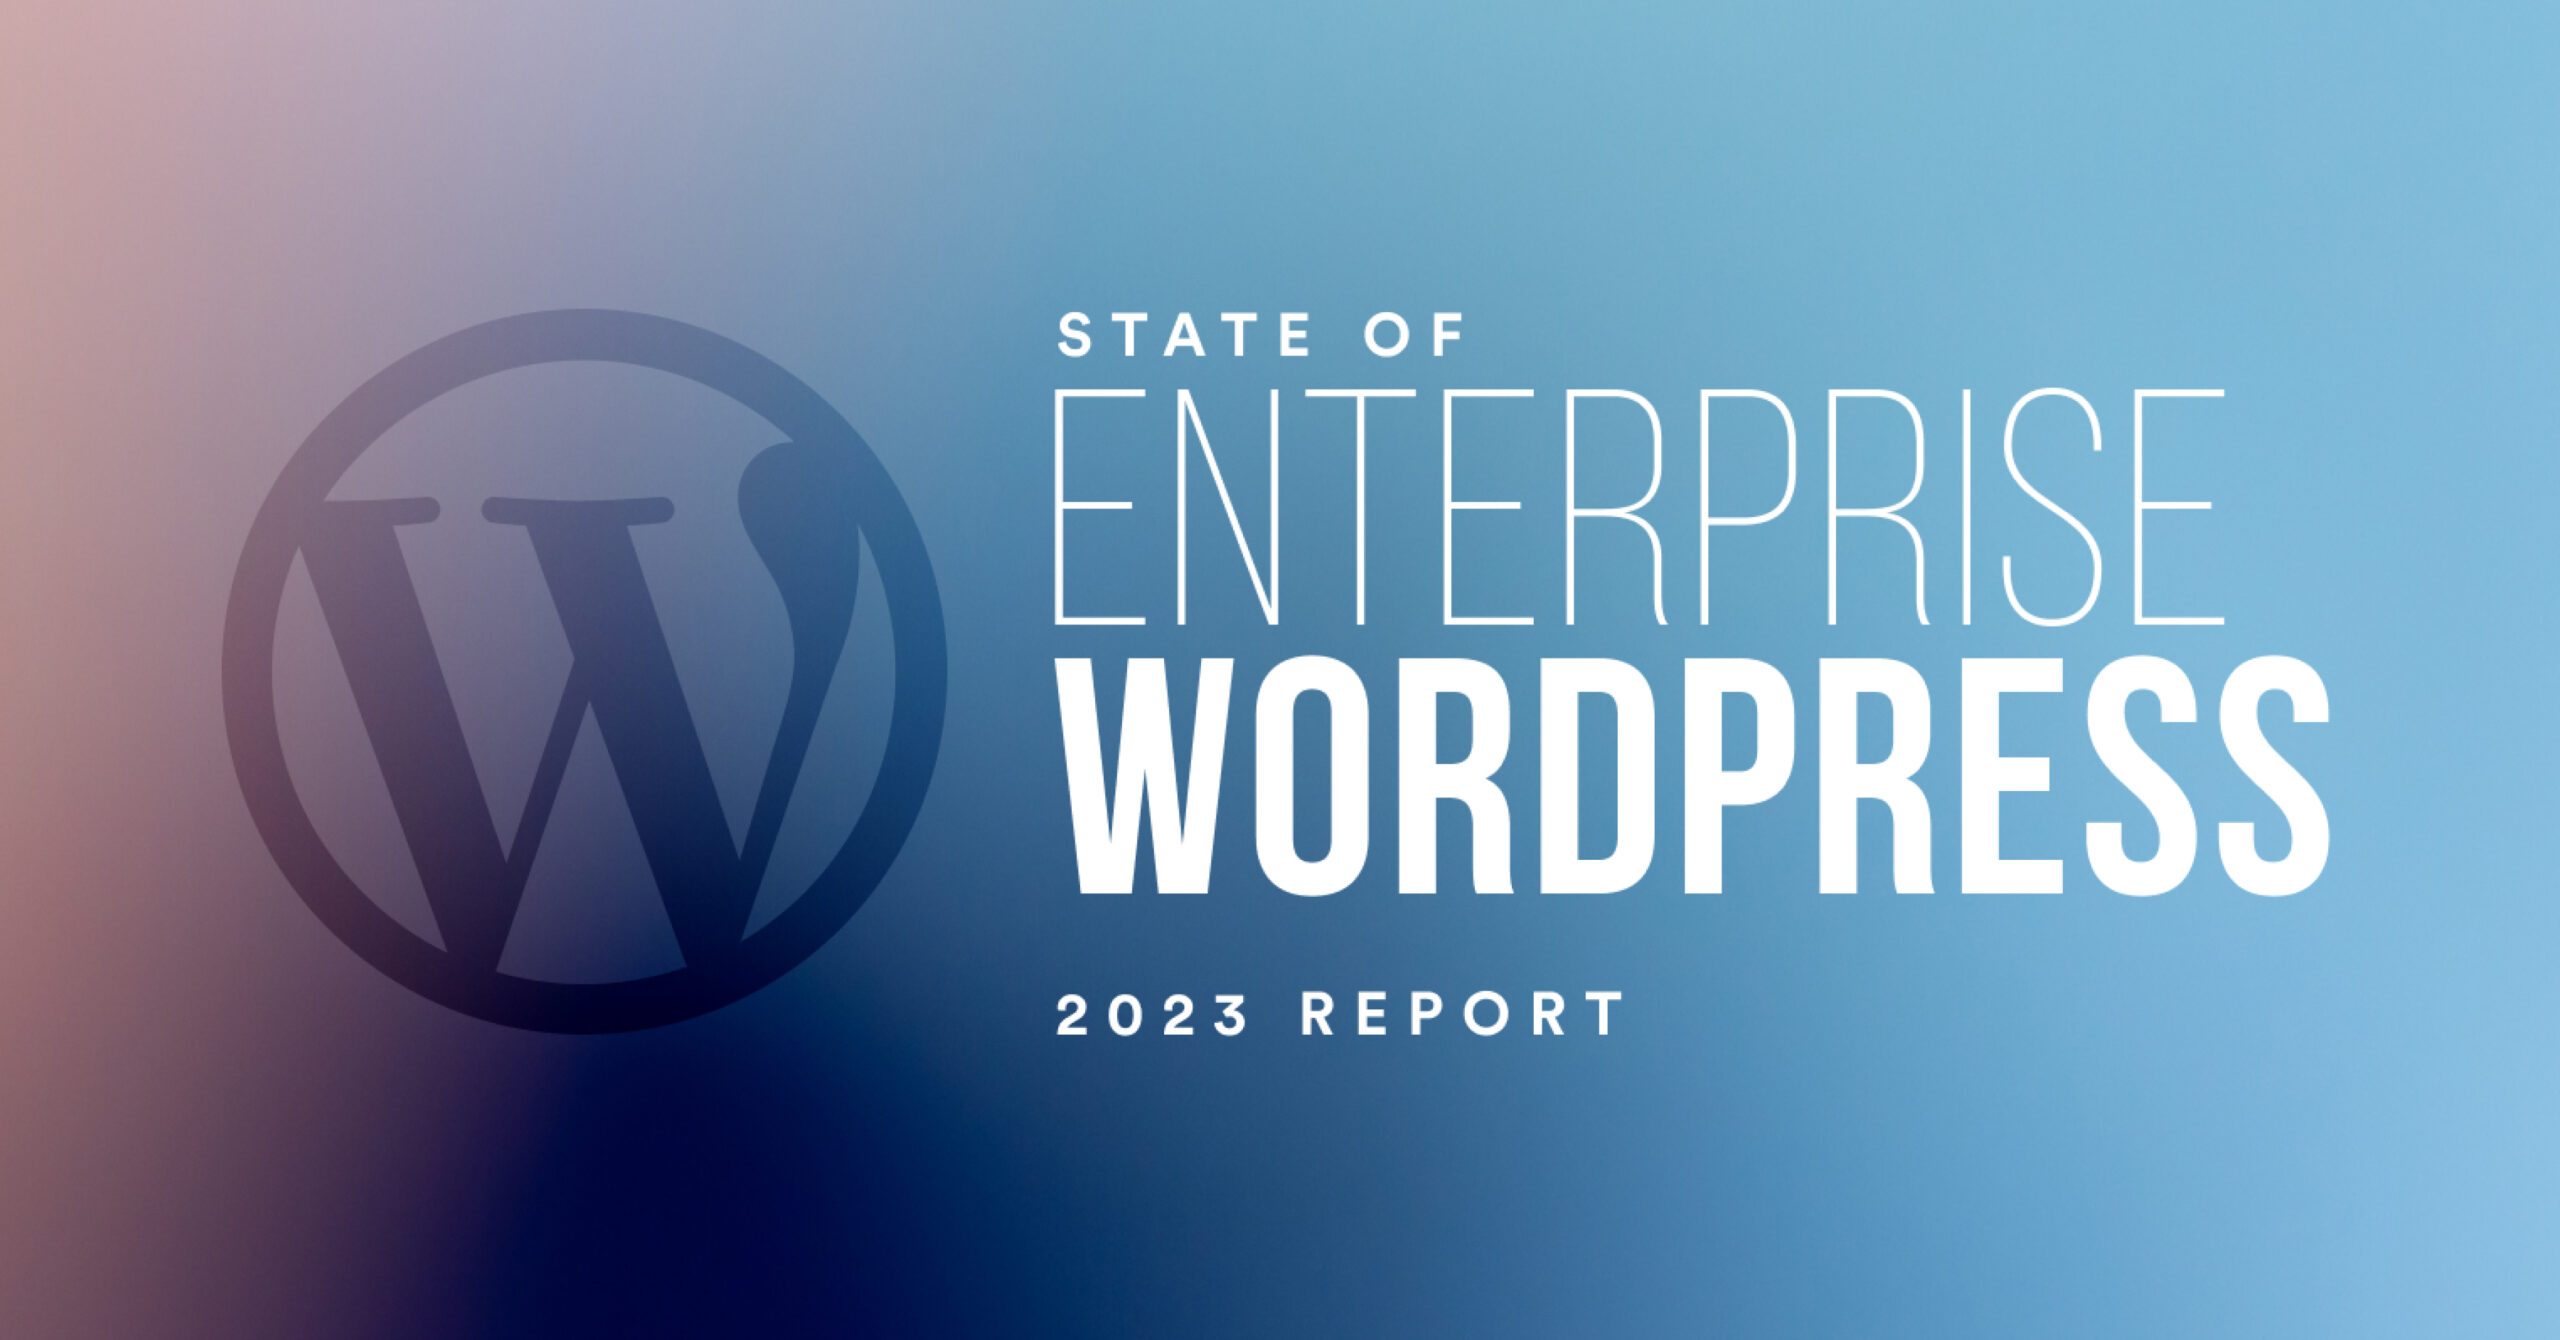 State of Enterprise WordPress  2023 Report title with WordPress logo